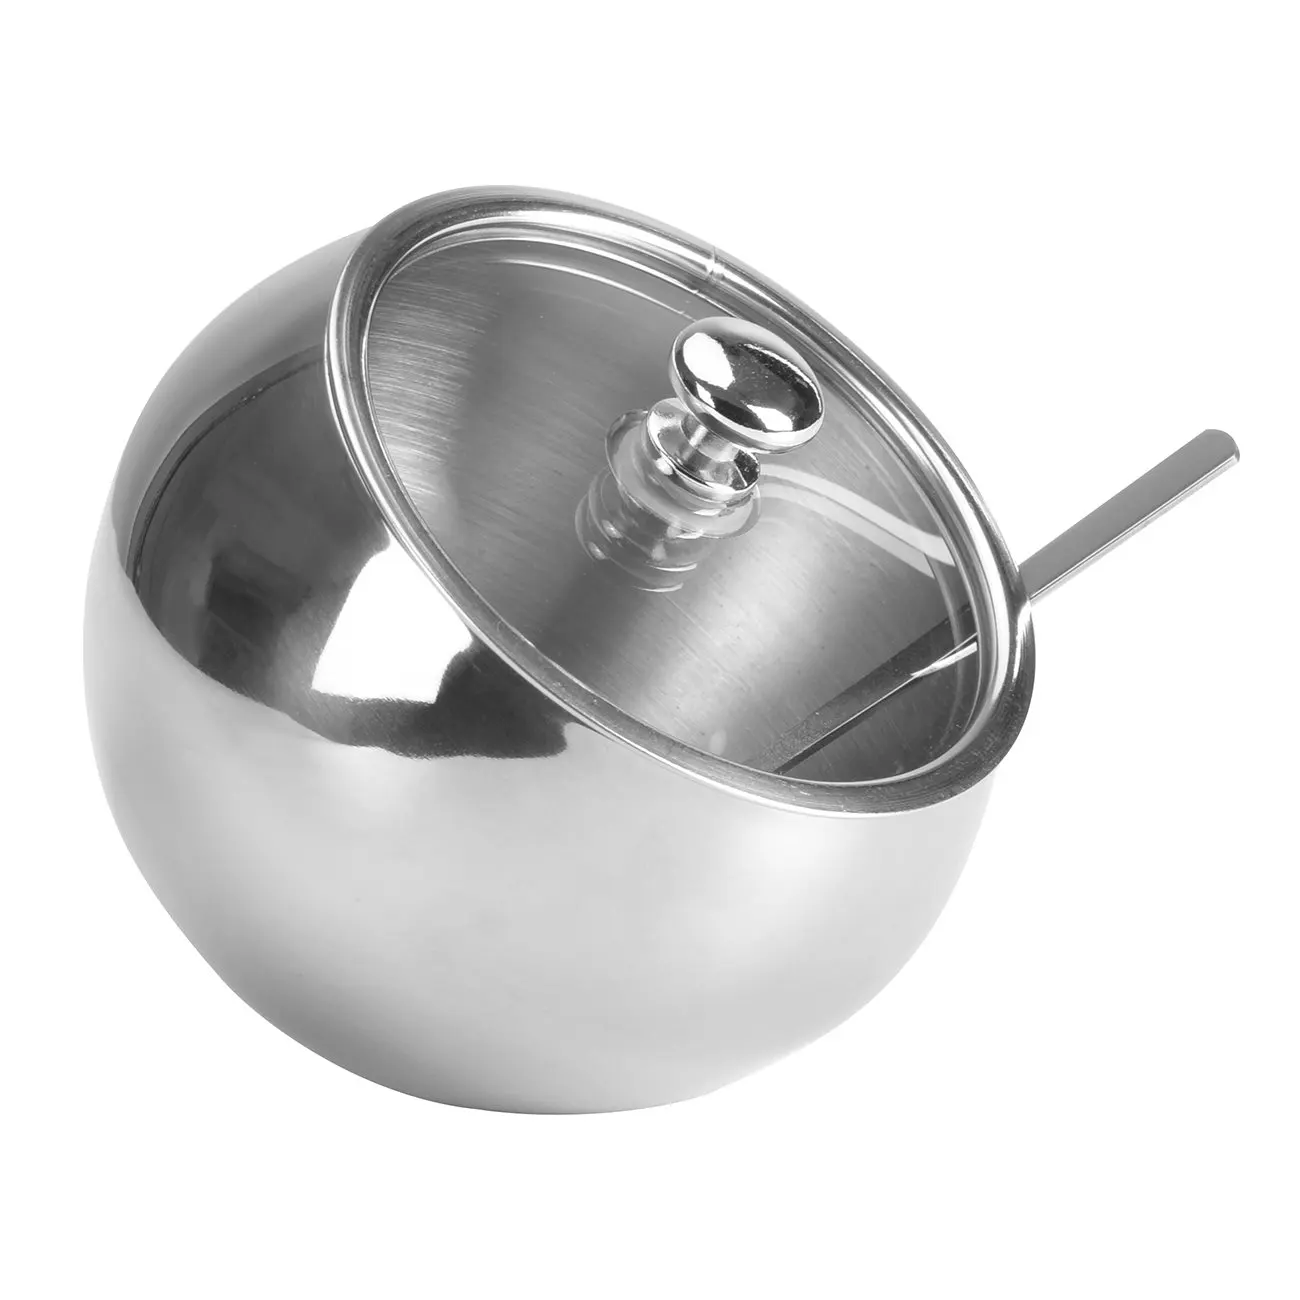 Cheap Sugar Bowl Spoon, find Sugar Bowl Spoon deals on line at Alibaba.com